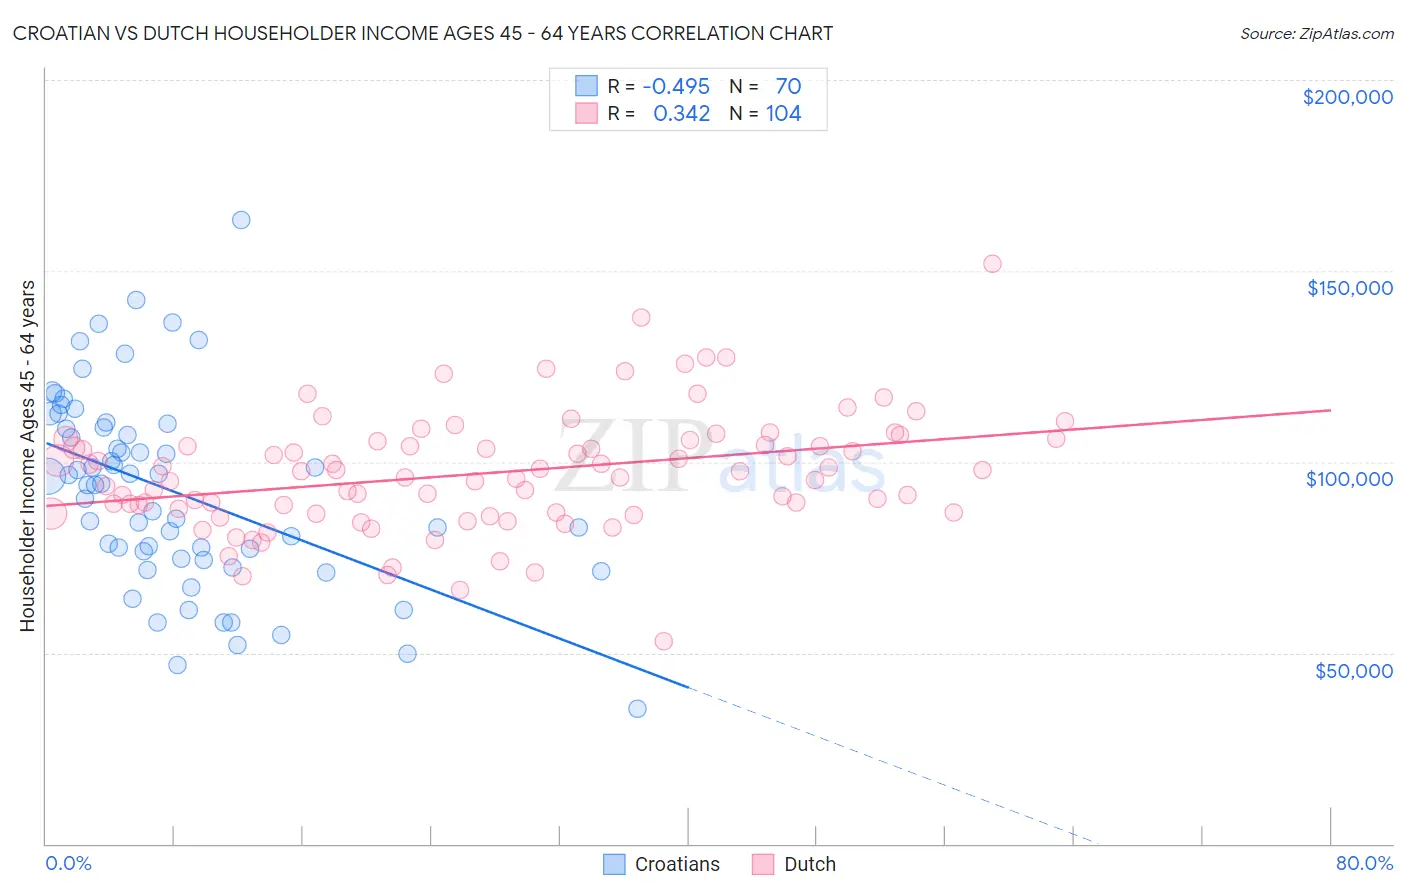 Croatian vs Dutch Householder Income Ages 45 - 64 years